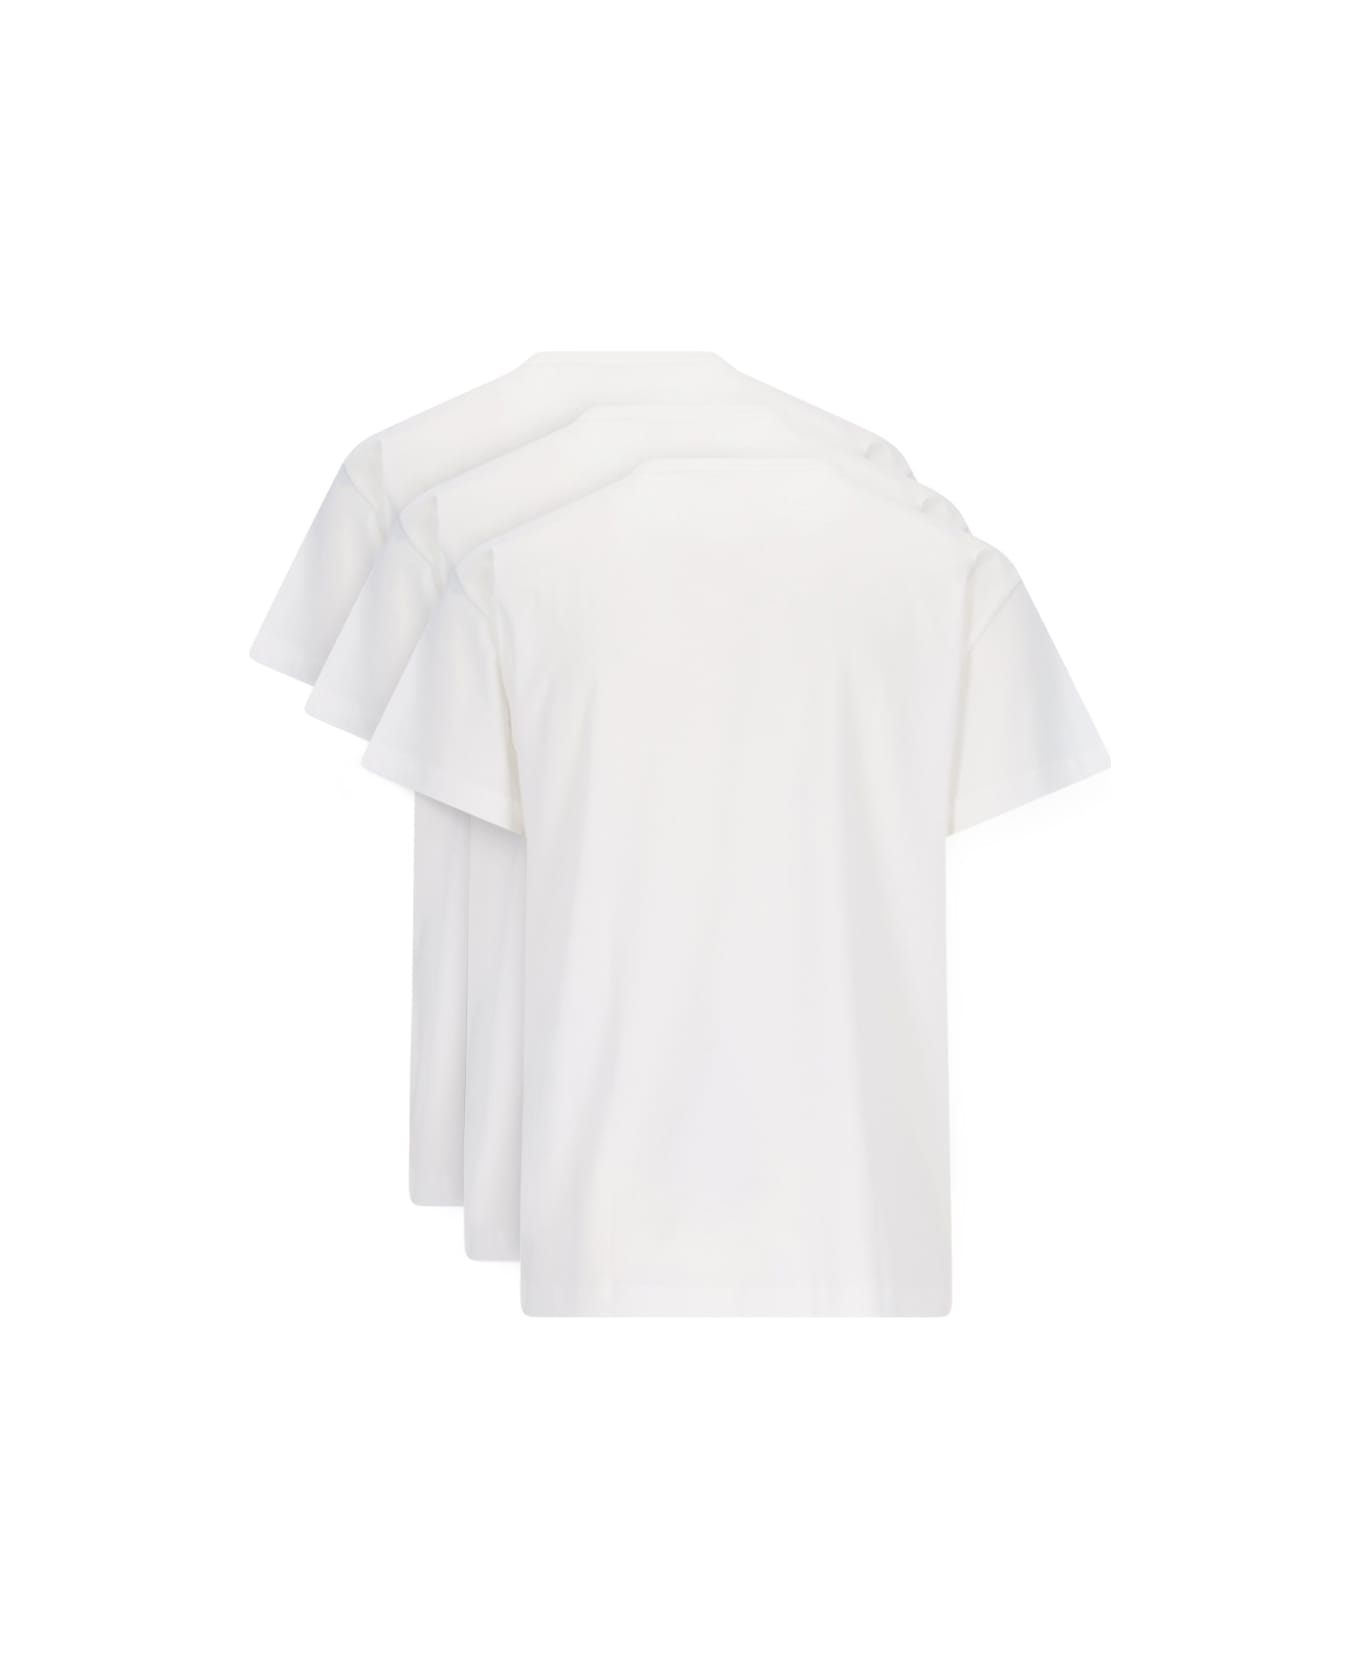 Jil Sander '3-pack' T-shirt Set - White シャツ